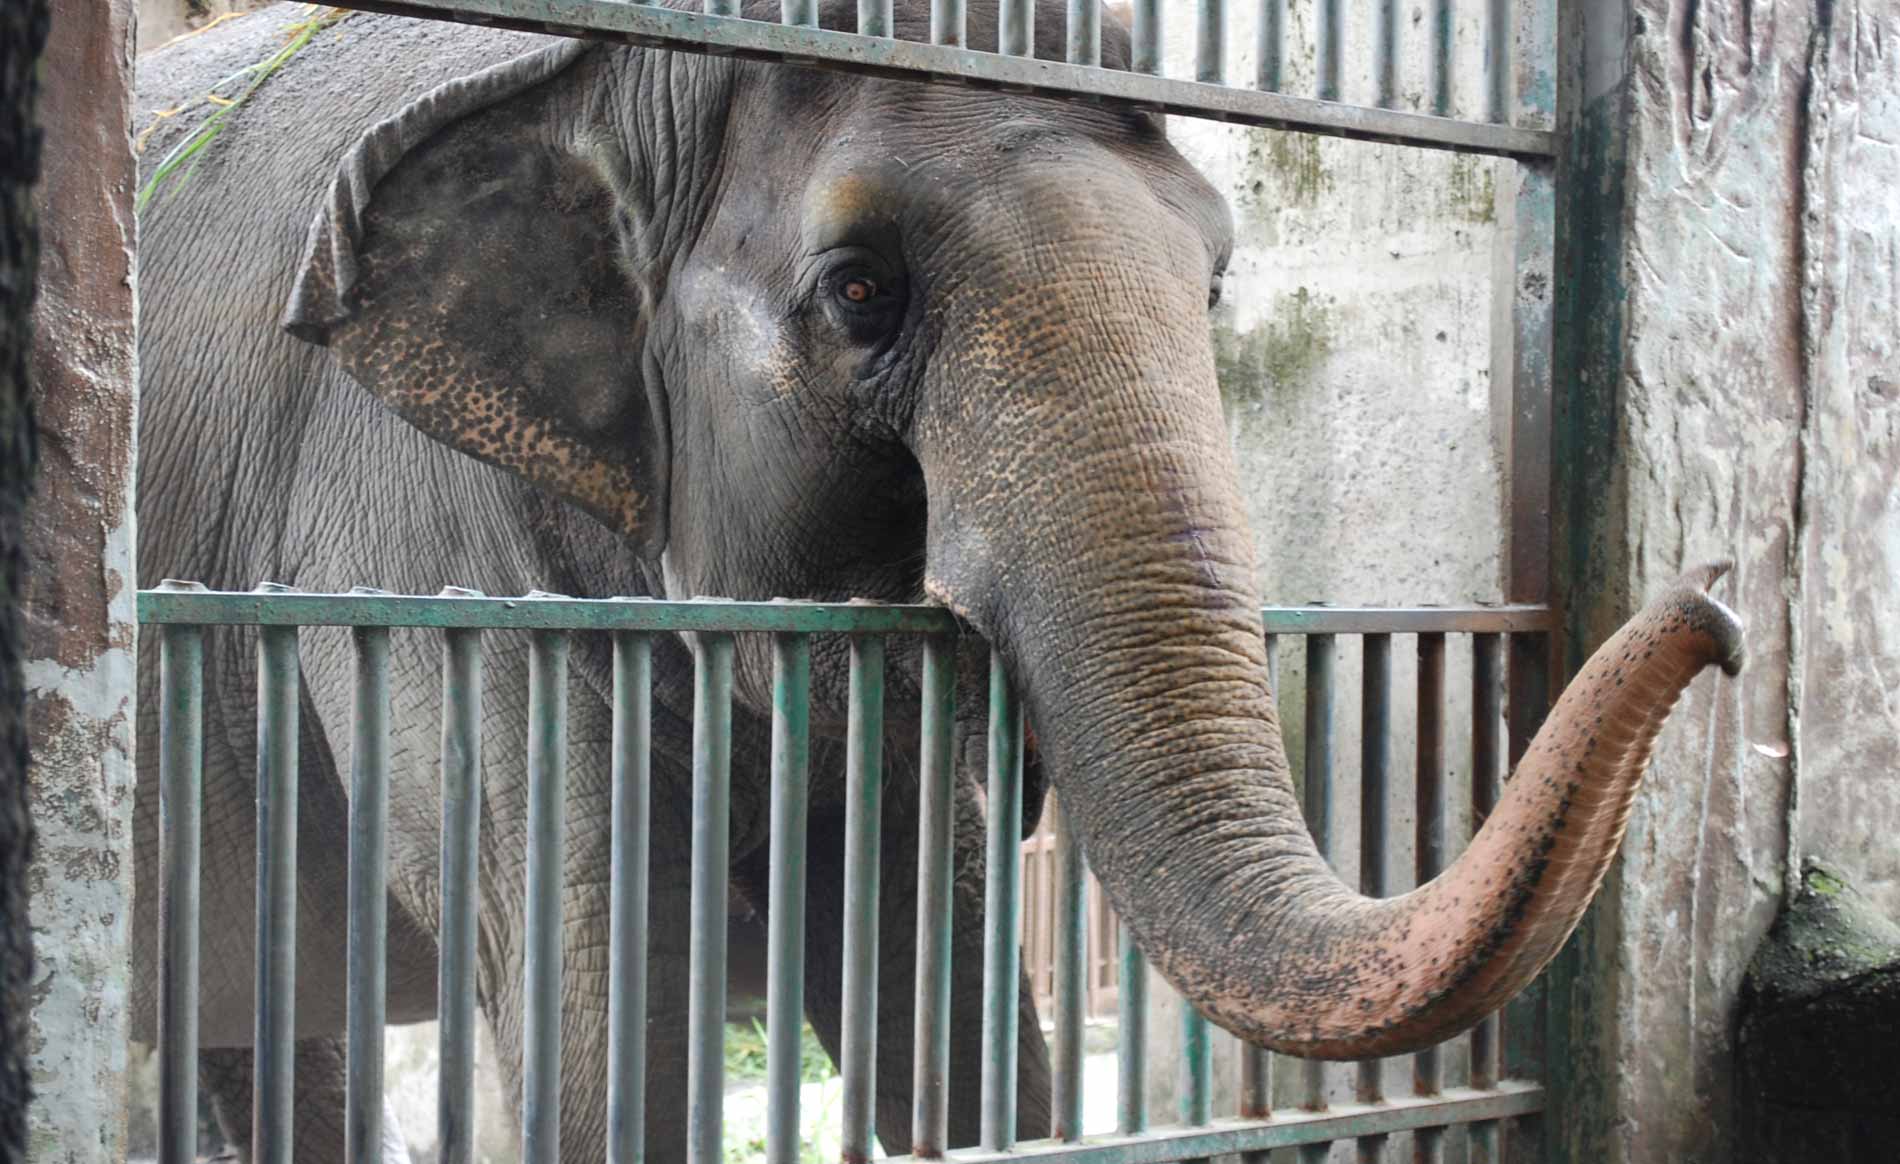 PETA Mourns Mali, the Elephant Who Spent Decades Alone at the Manila Zoo